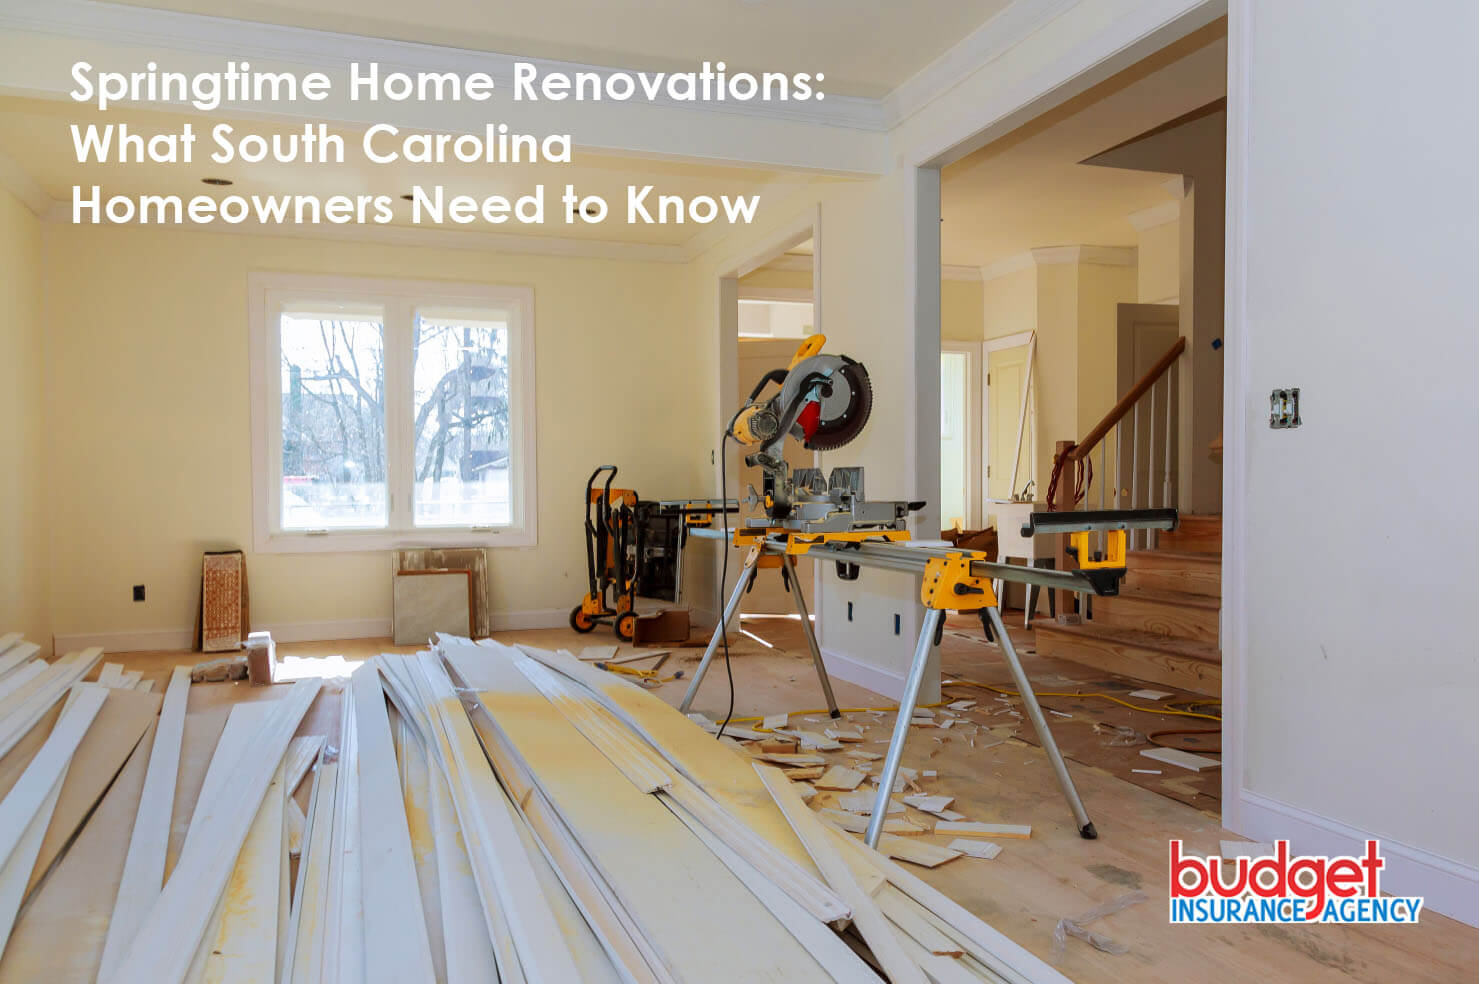 Springtime Home Renovations: What South Carolina Homeowners Need to Know